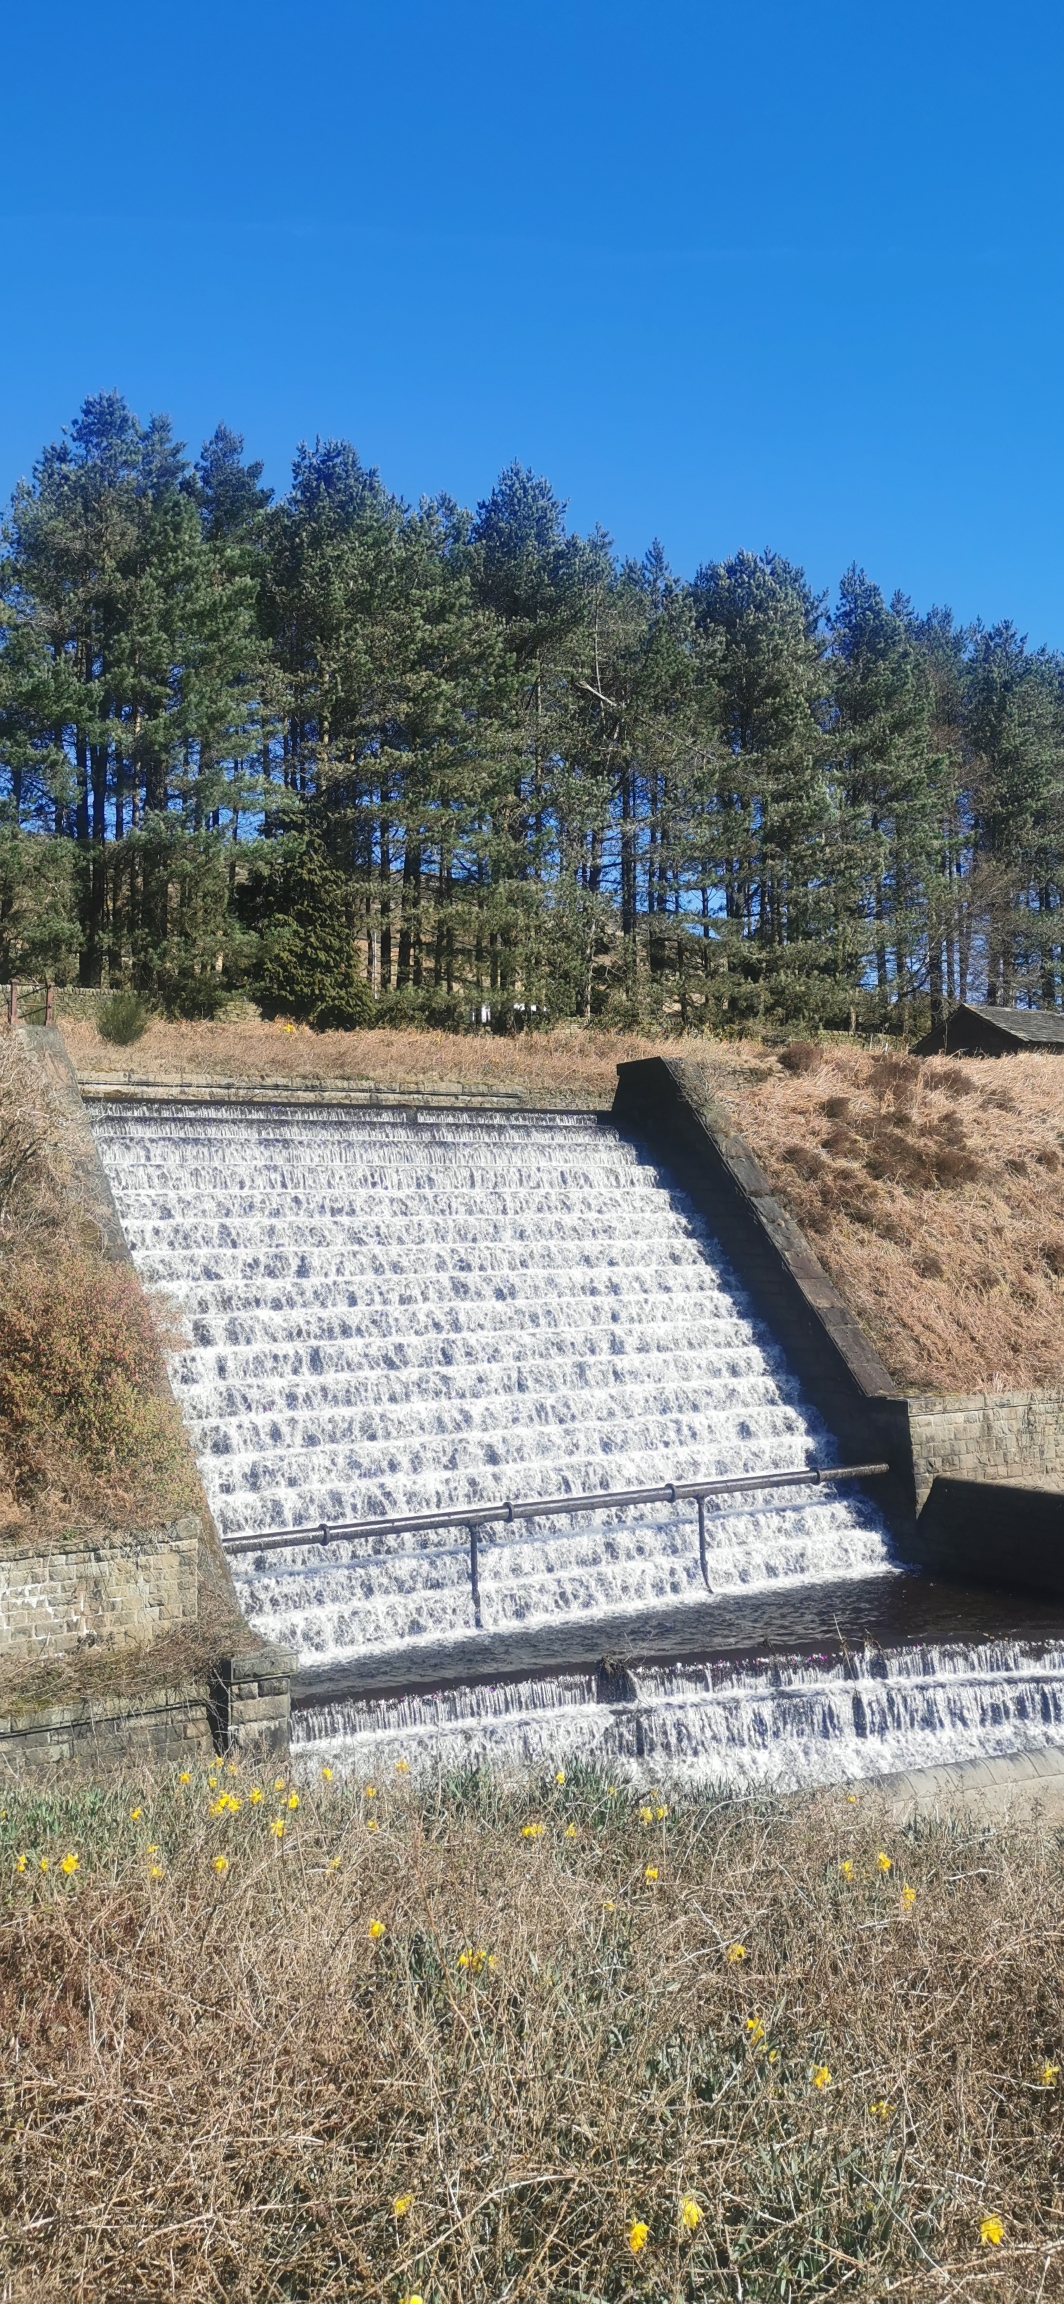 Photo taken between Torside Reservoir and Woodhead Reservoir